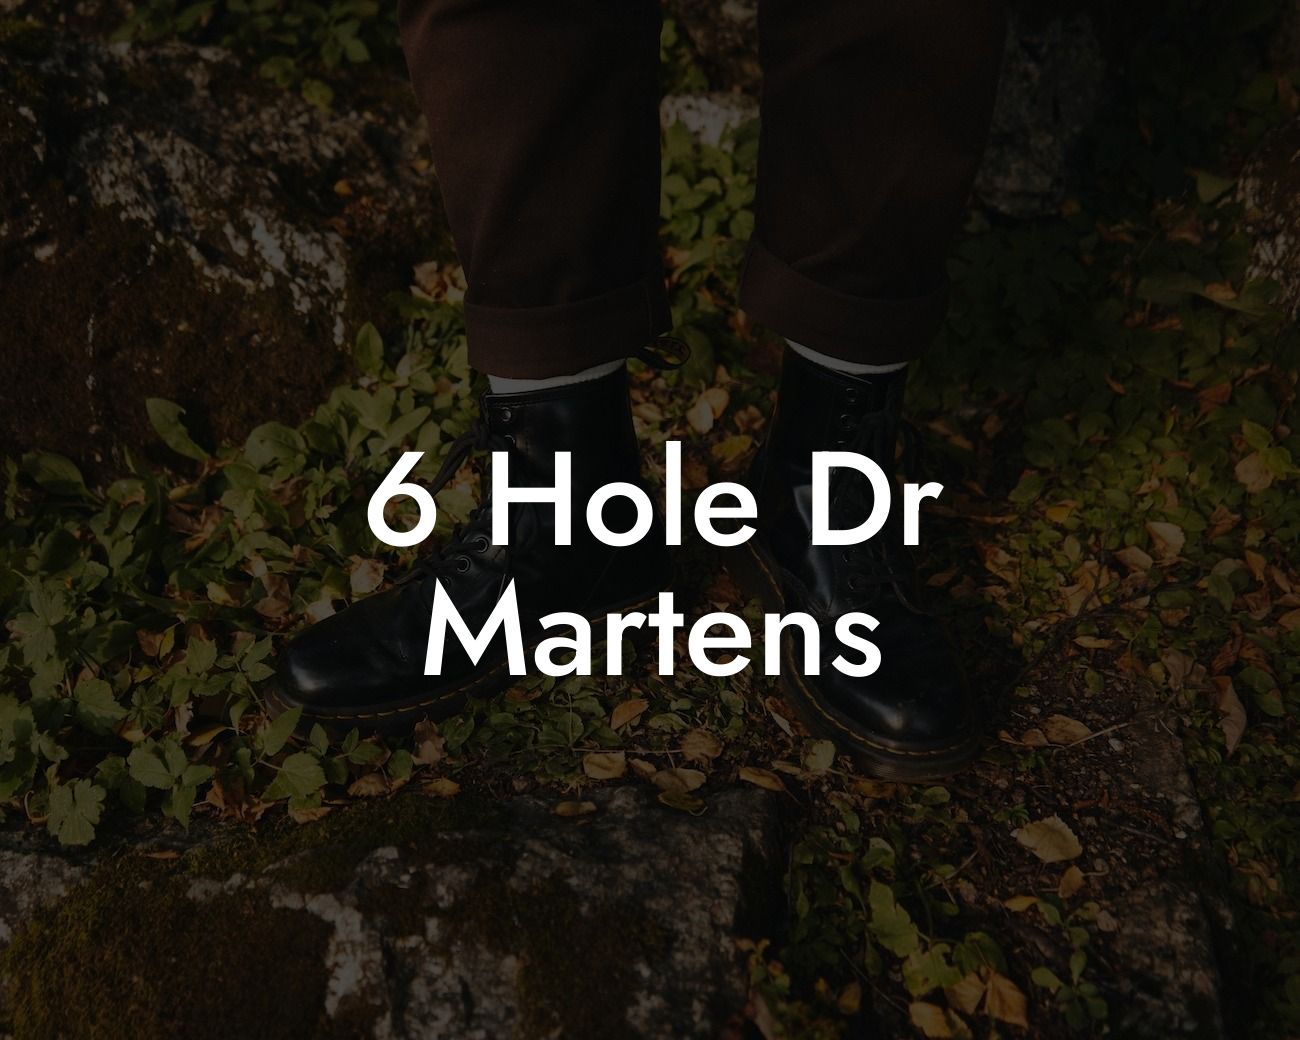 6 Hole Dr Martens